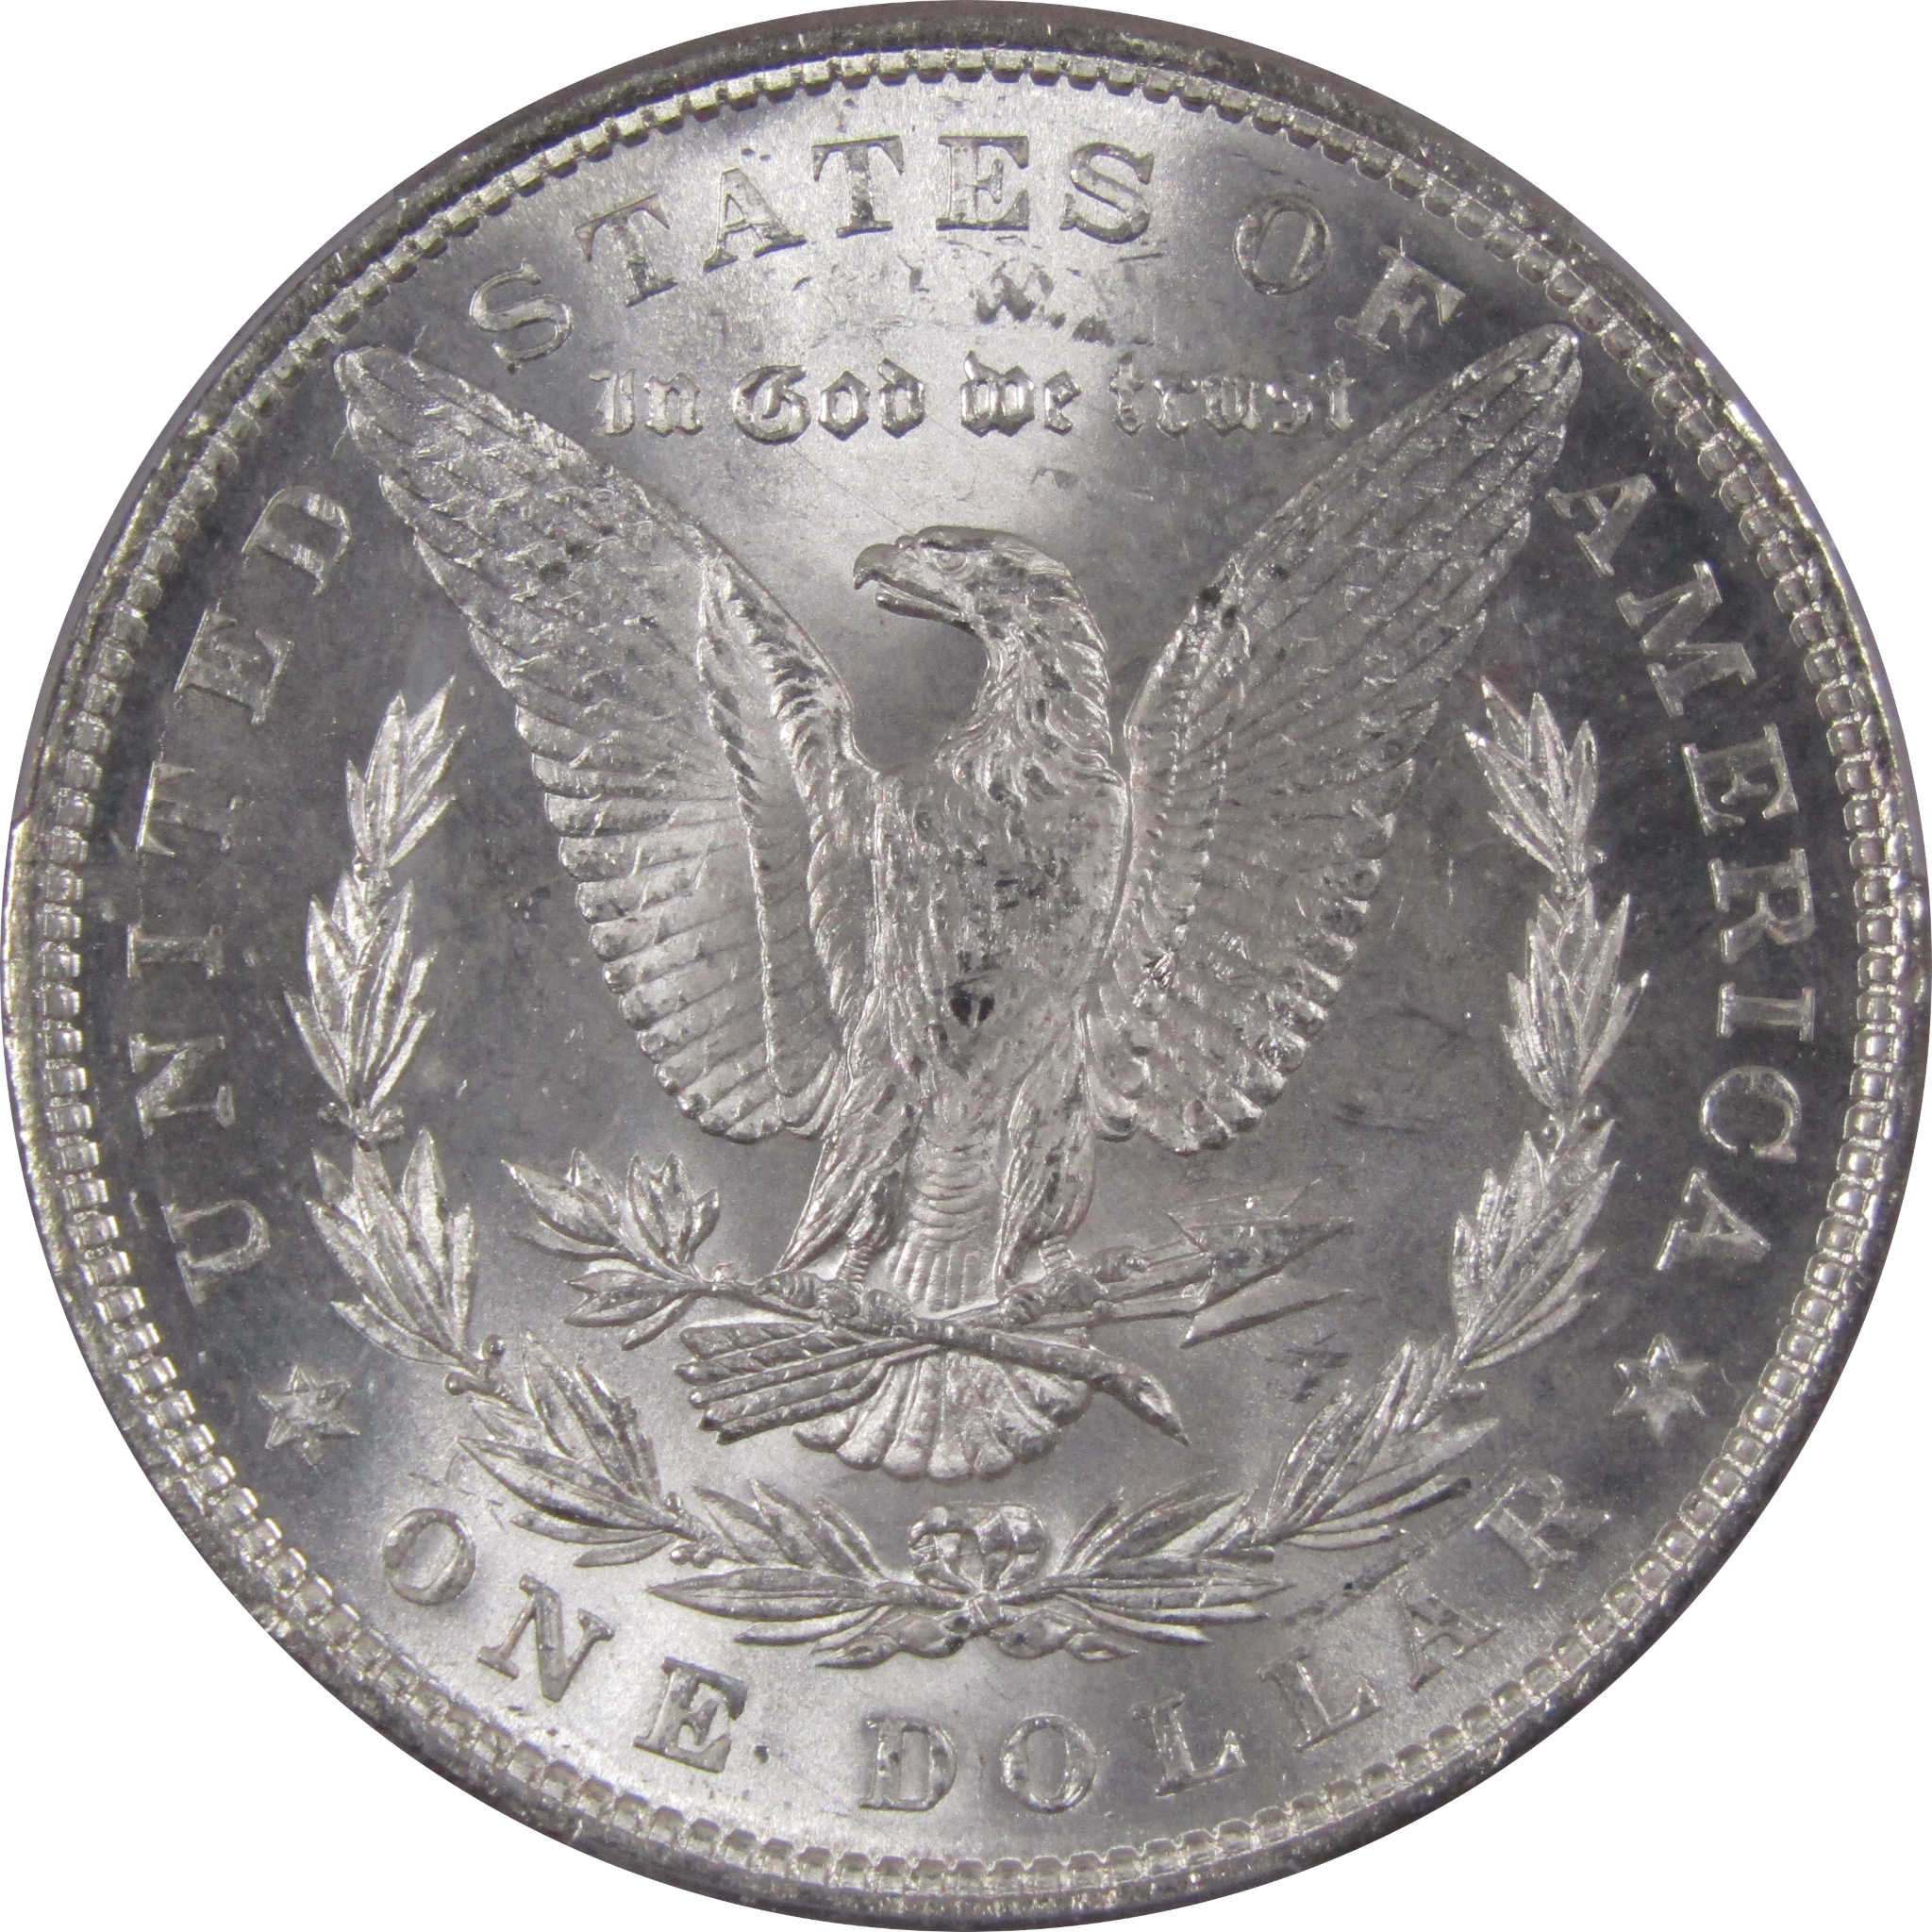 1878 7TF Rev 79 Morgan Dollar MS 62 PCGS Silver SKU:IPC6195 - Morgan coin - Morgan silver dollar - Morgan silver dollar for sale - Profile Coins &amp; Collectibles